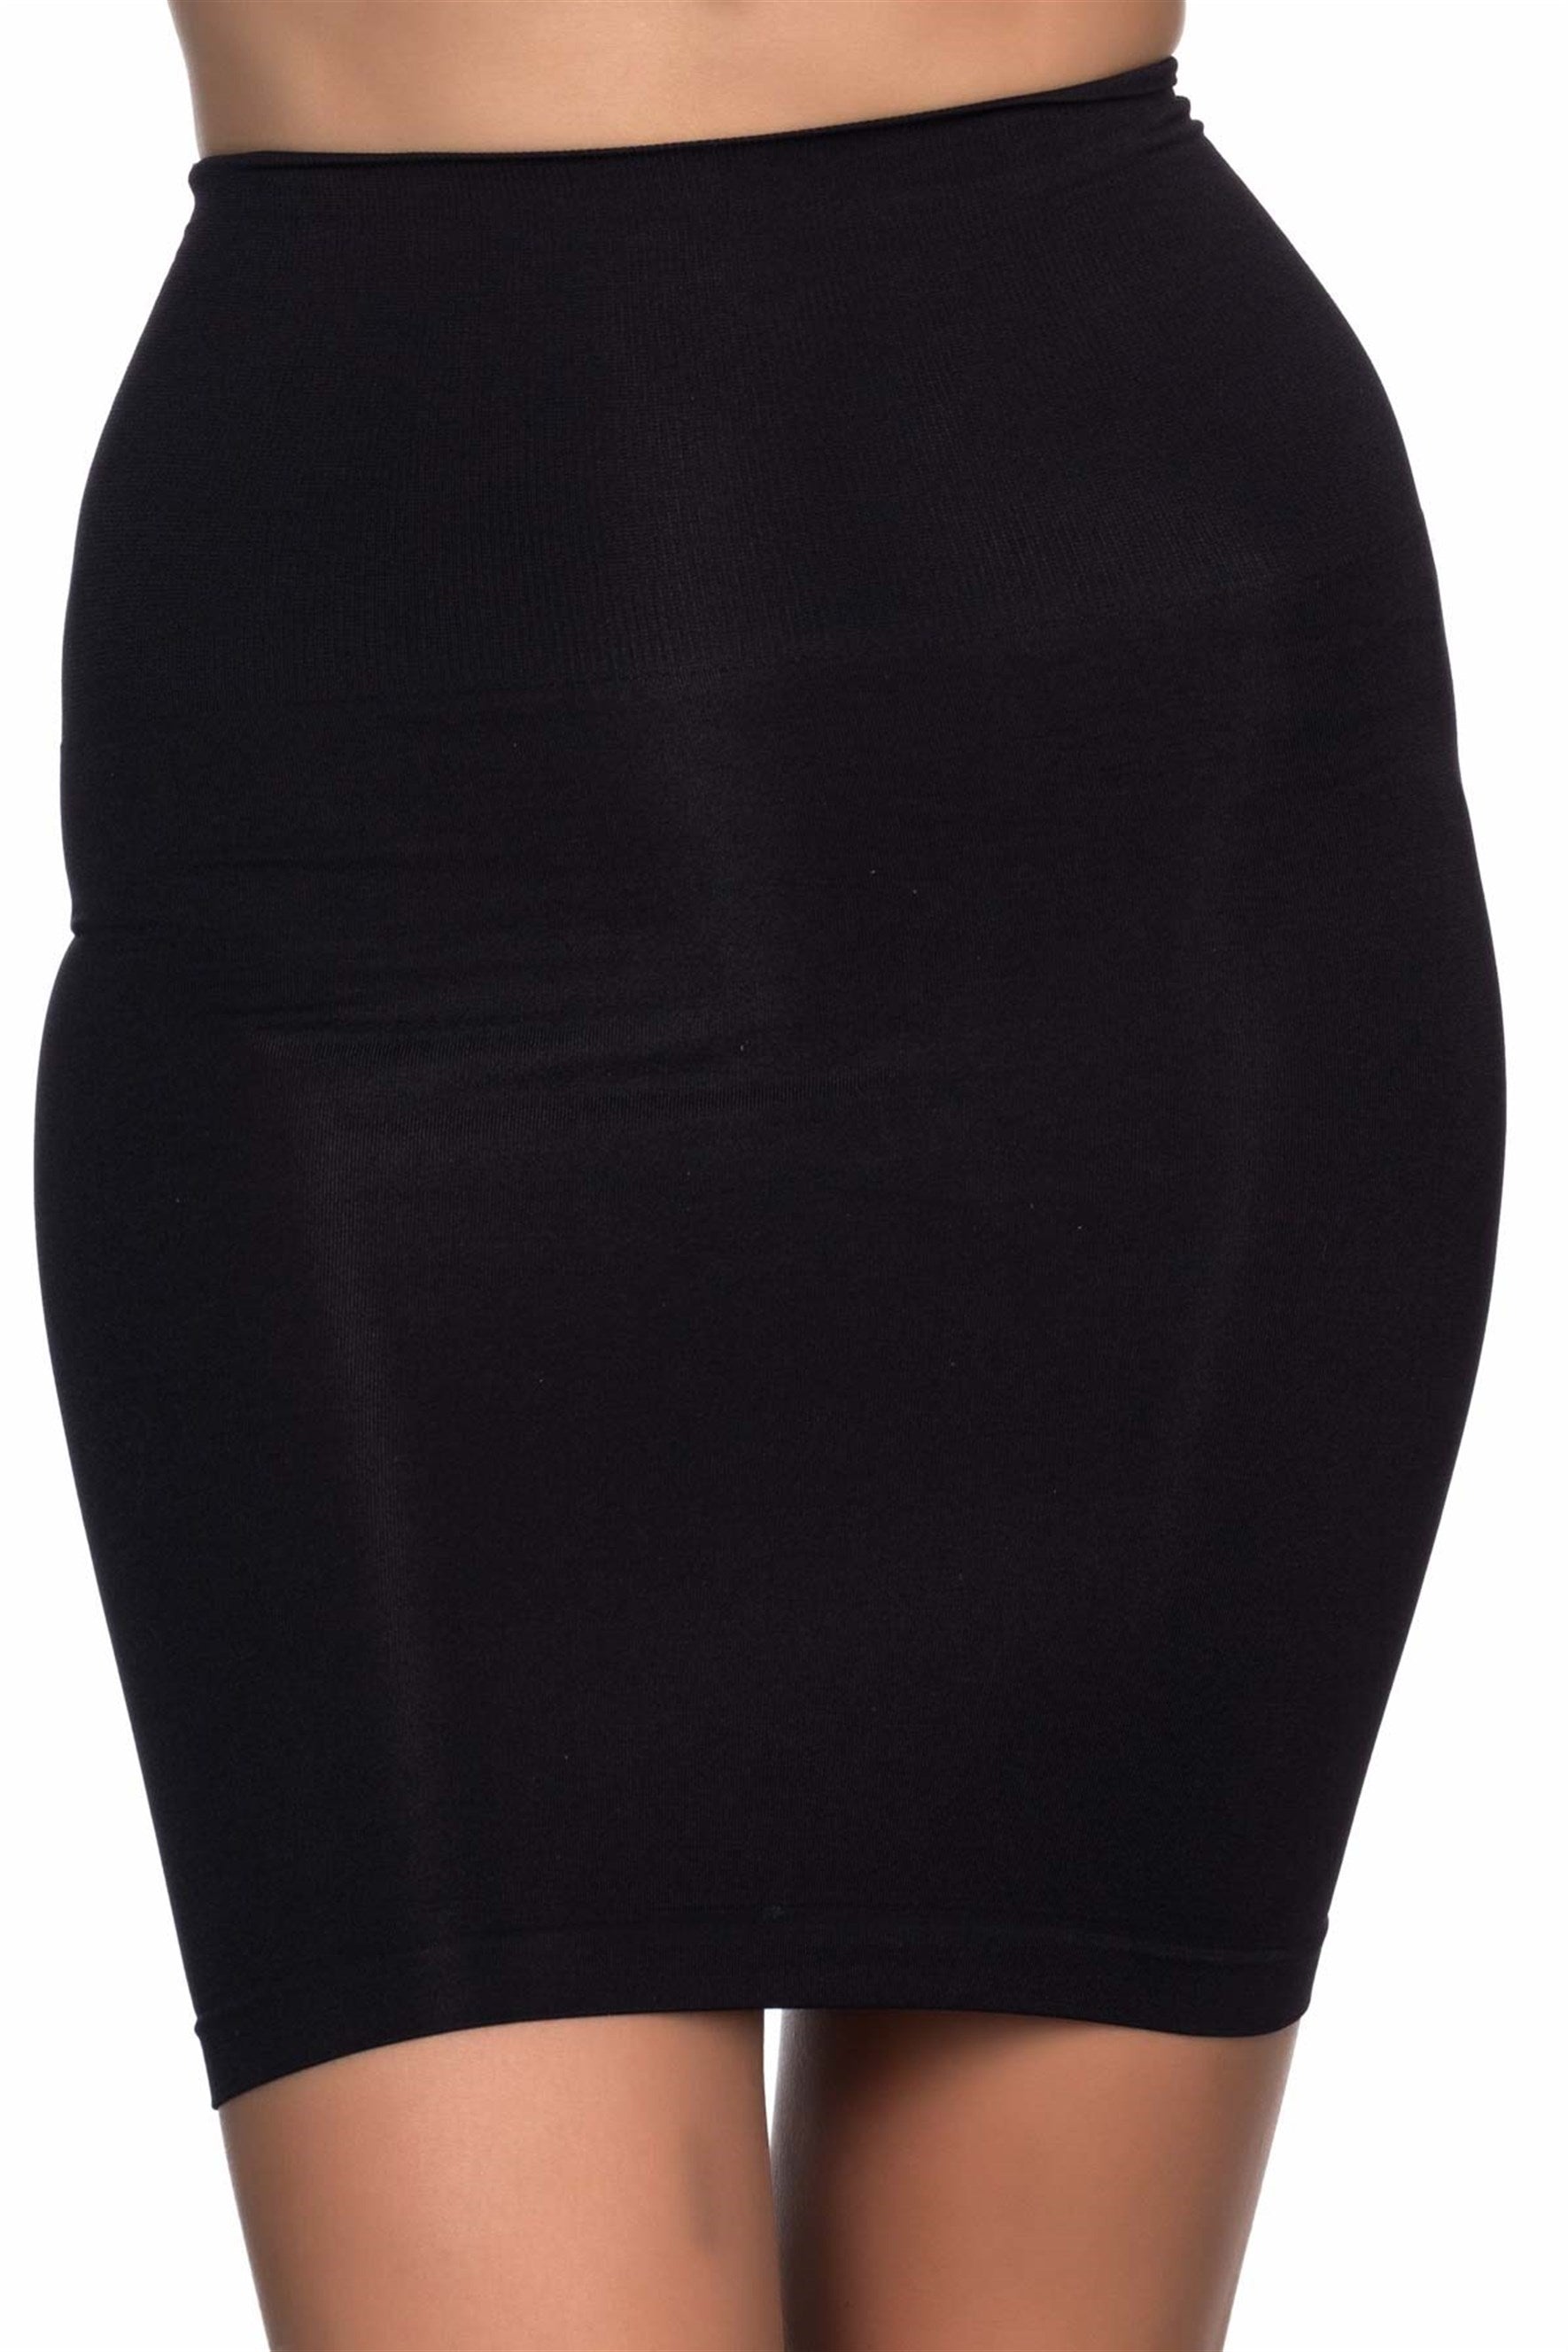 Seamless Petticoat Panties Postpartum Corset - 2050